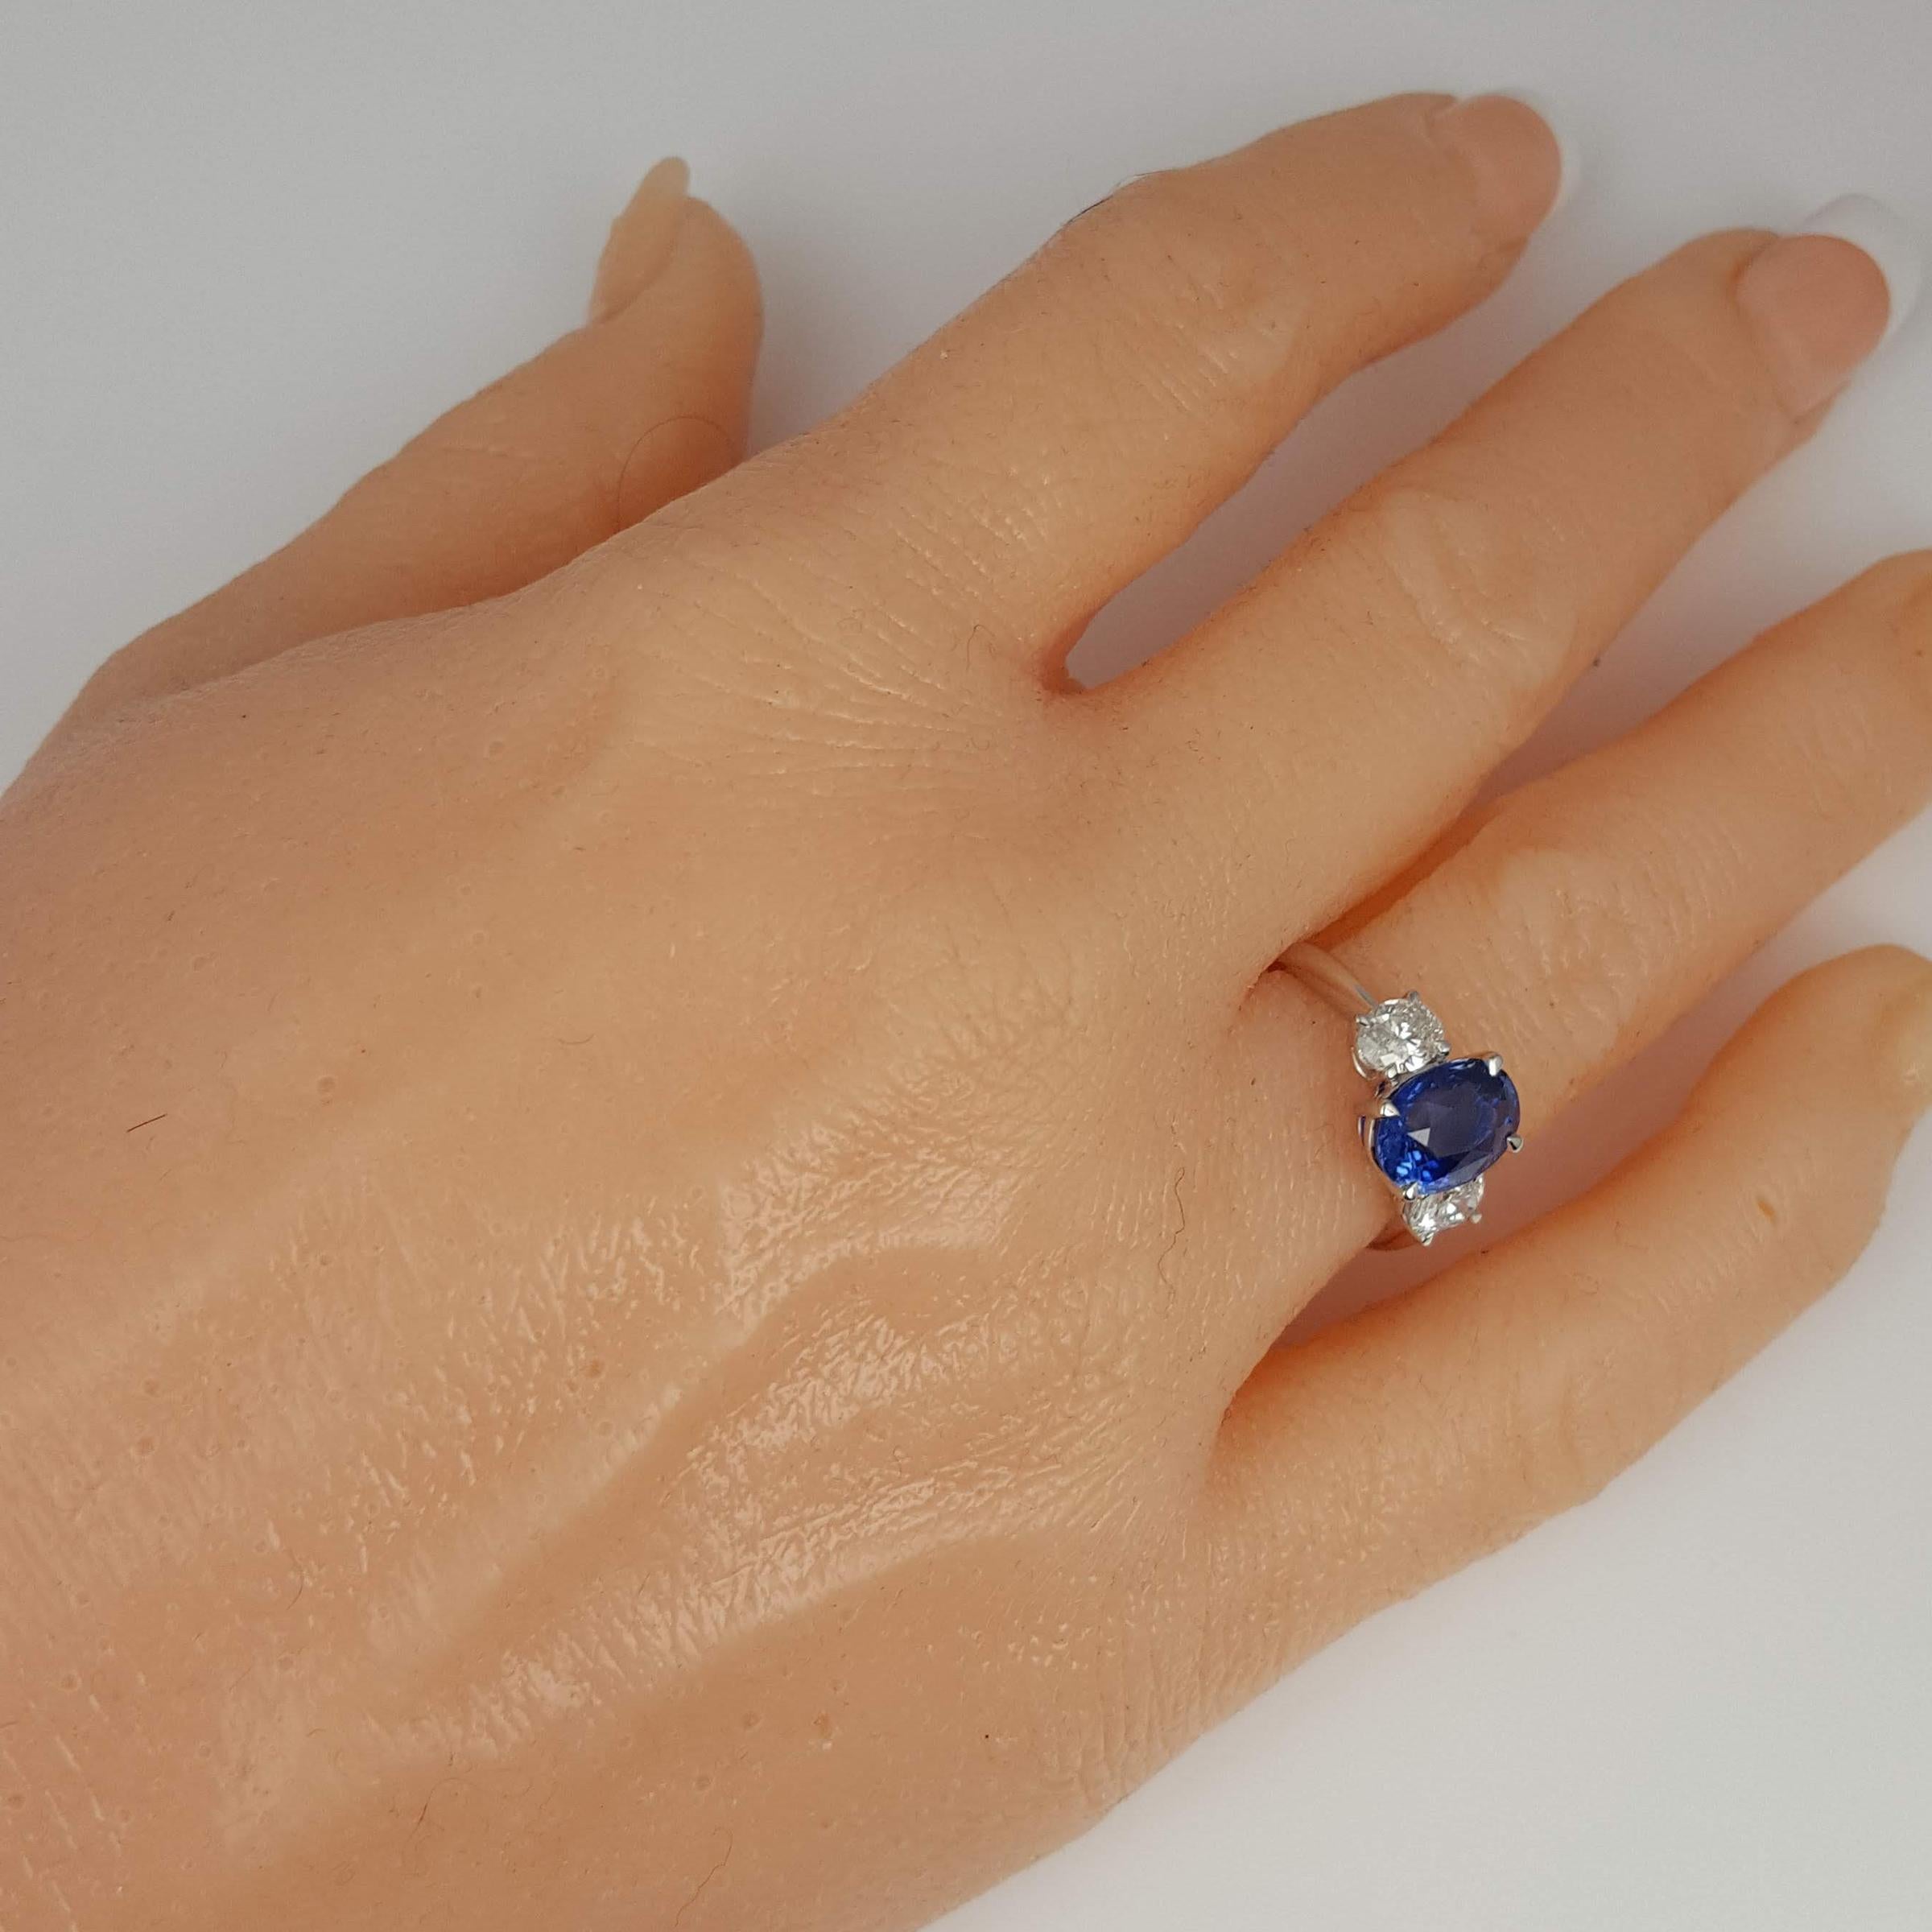 1.5 carat sapphire ring